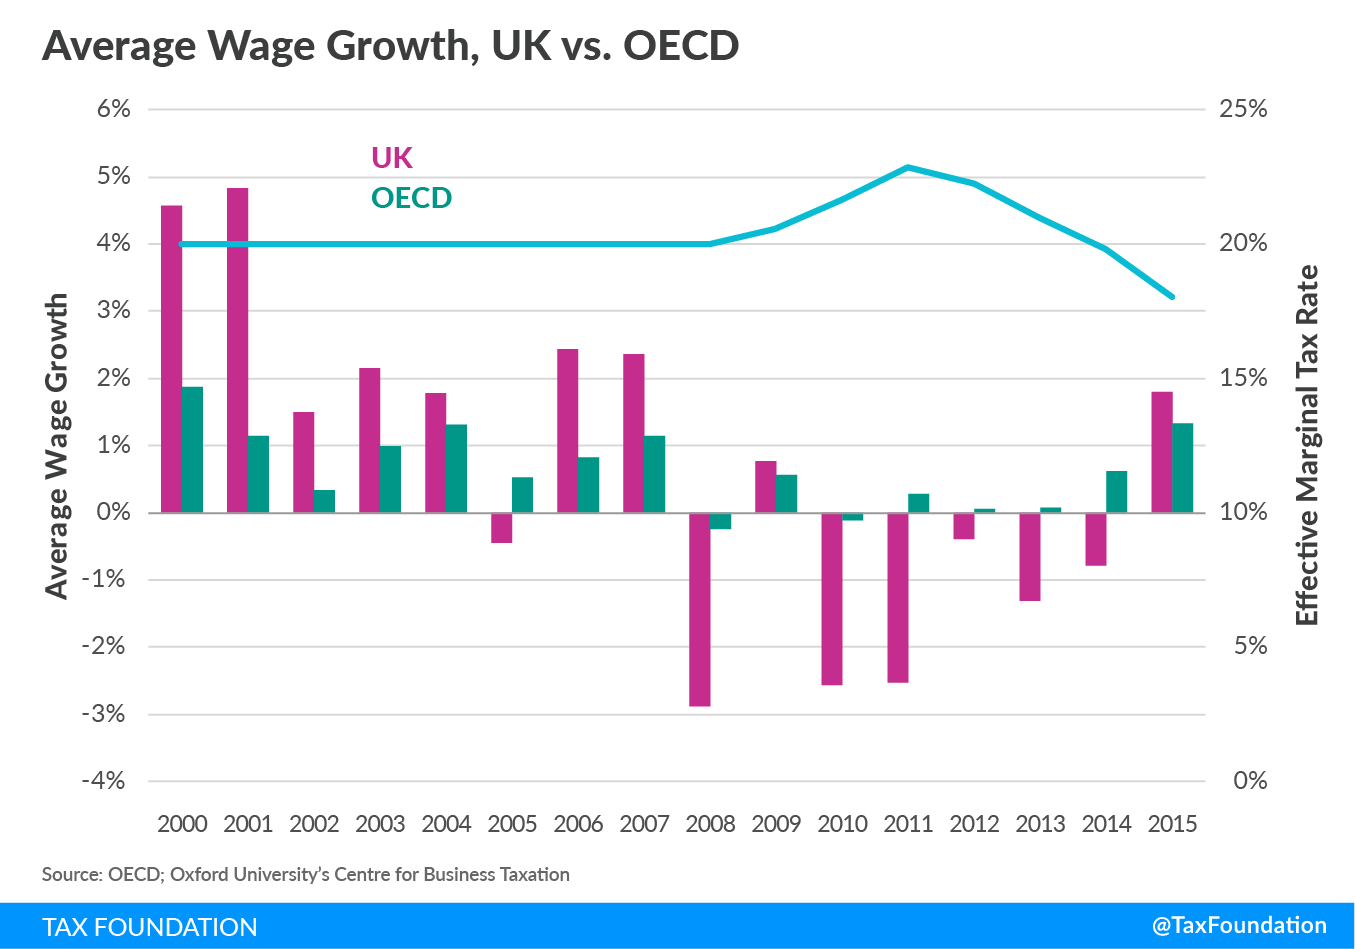 Effective Marginal Tax Rates - UK vs. OECD